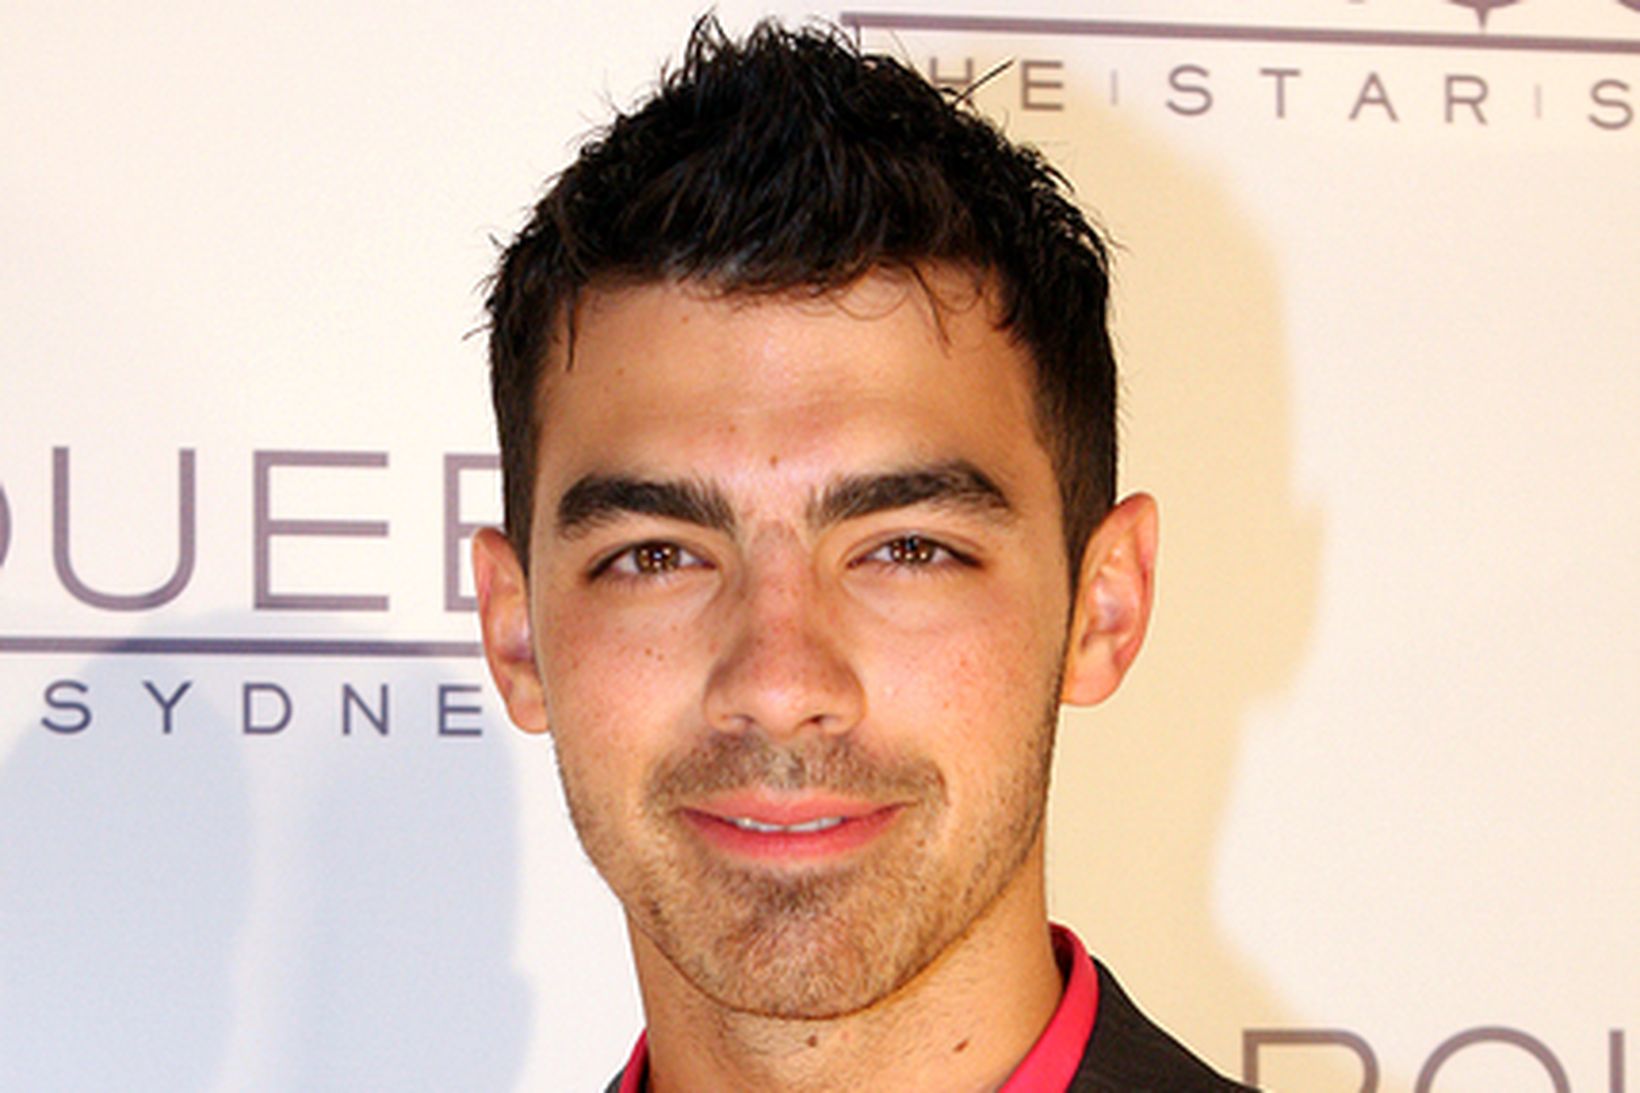 Joe Jonas úr hljómsveitinni The Jonas Brothers.